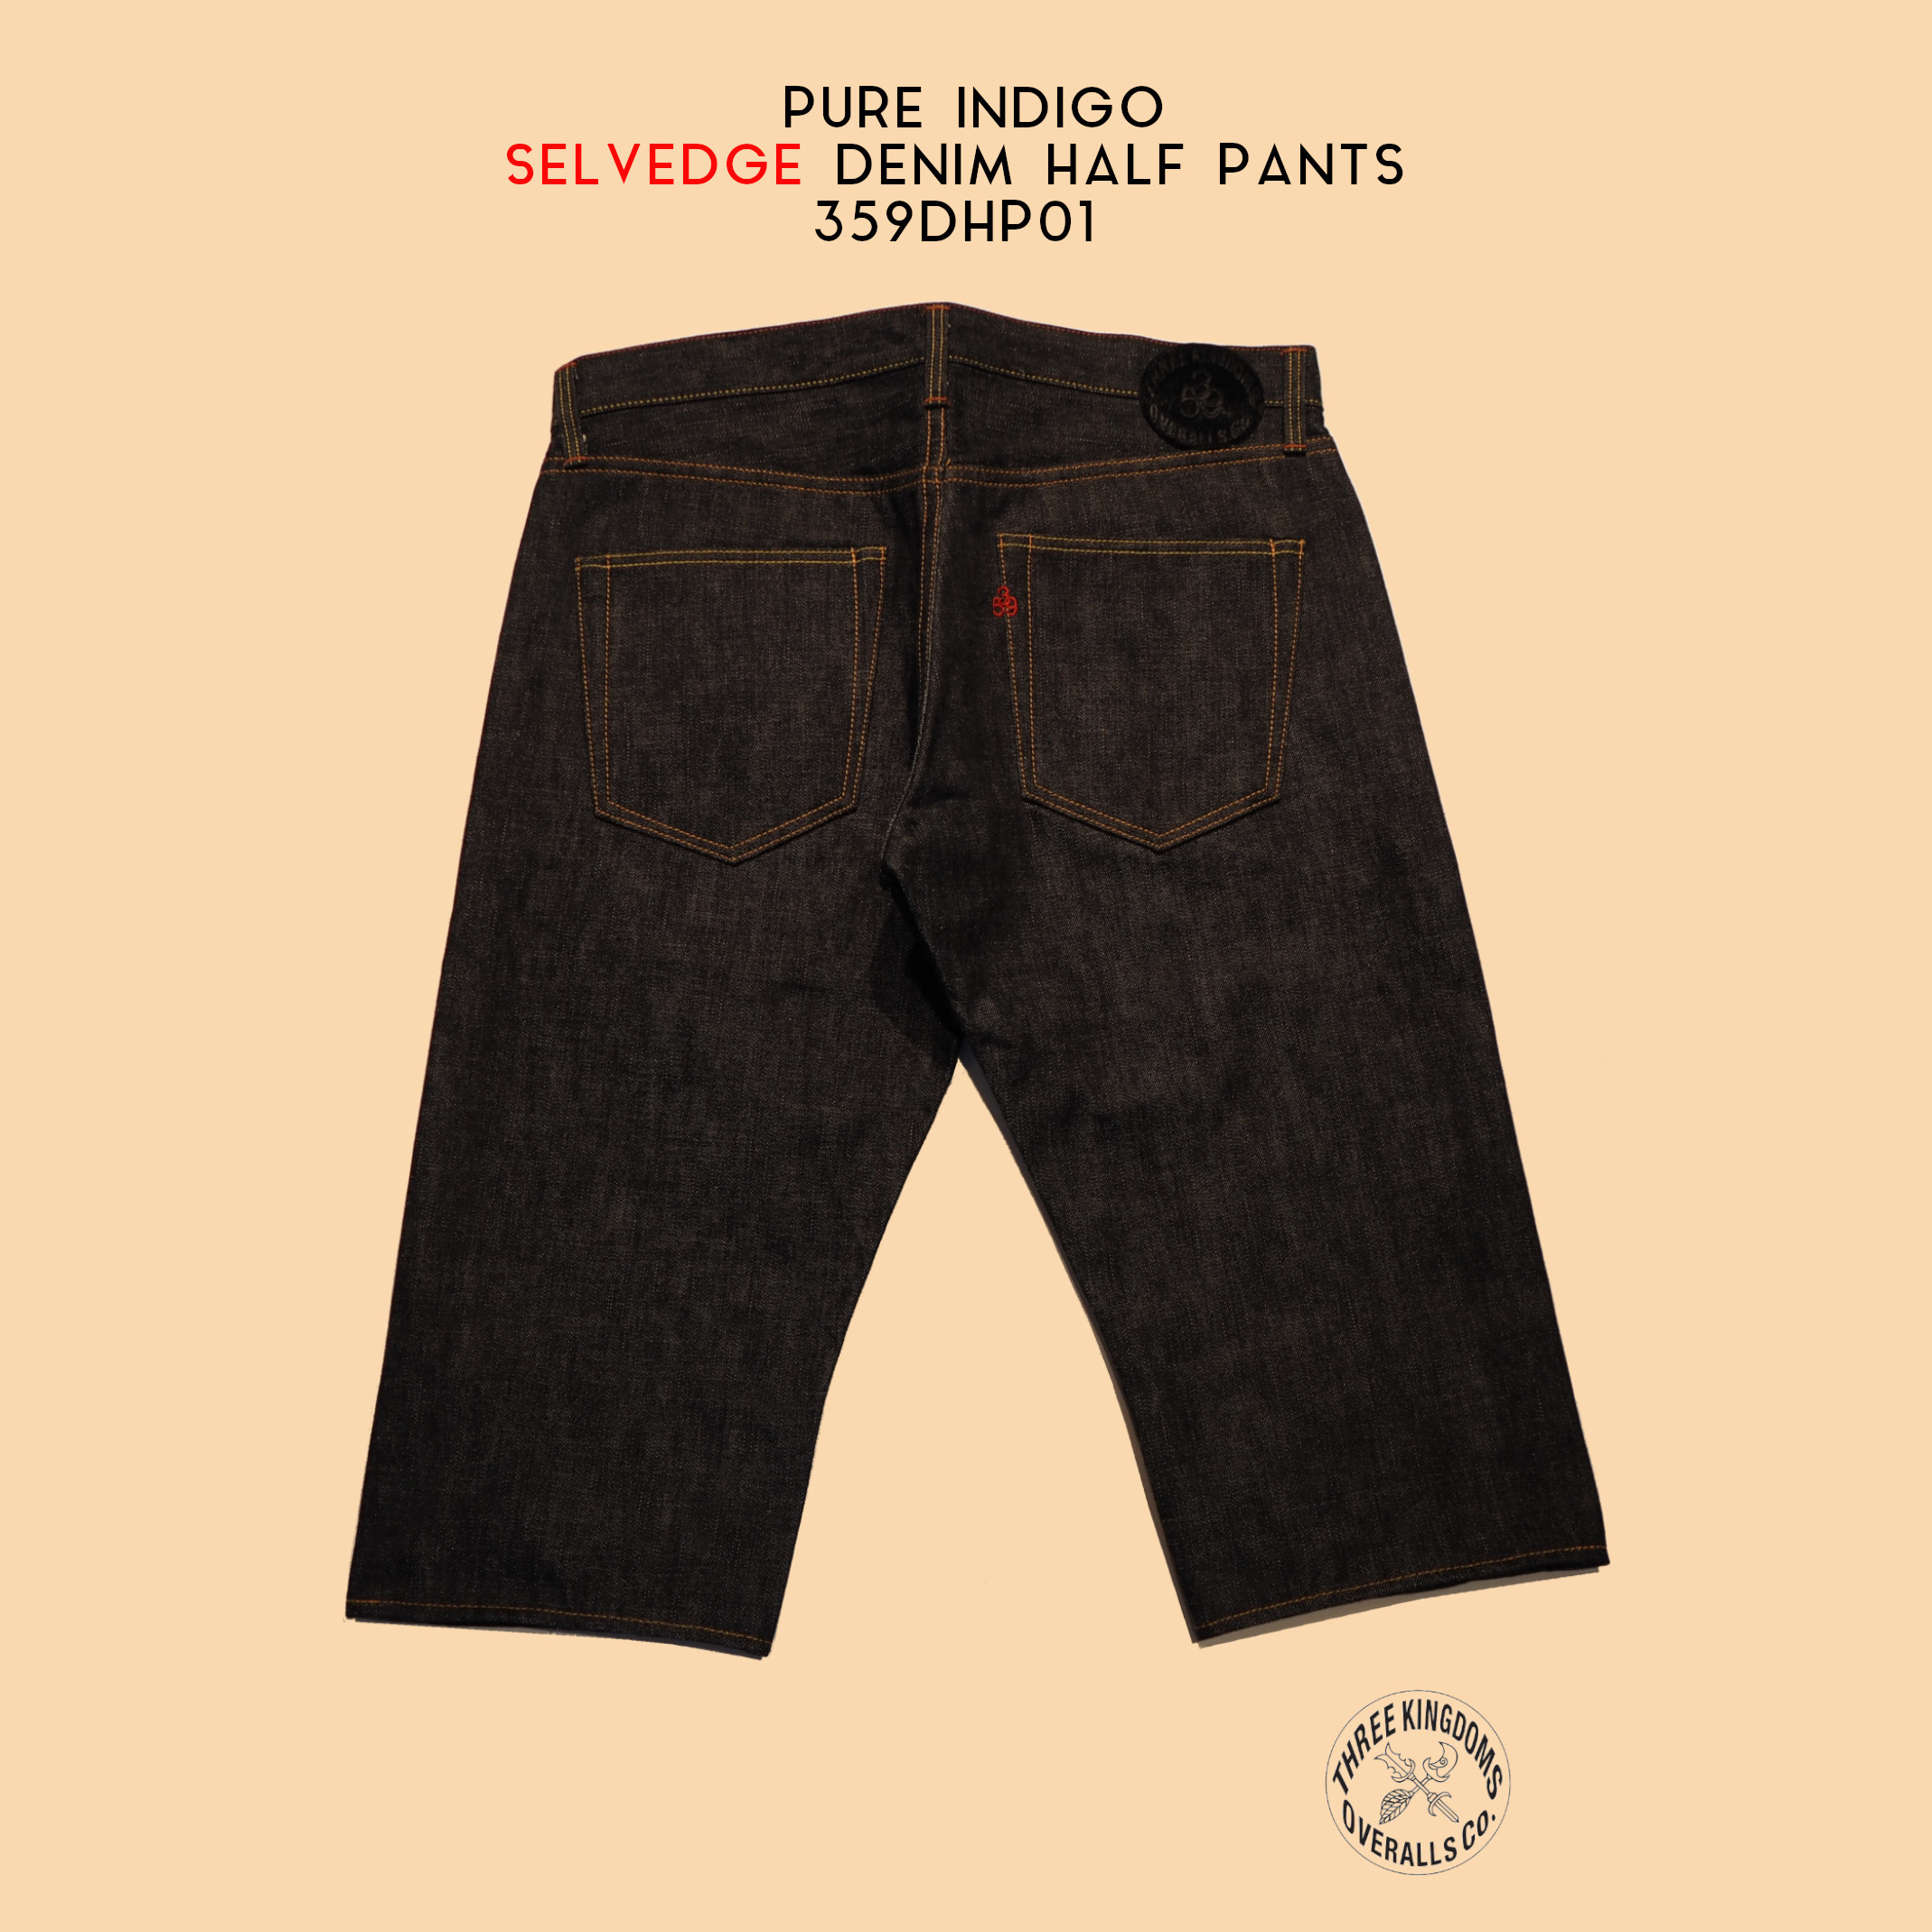 PURE INDIGO Selvedge Denim Half Pants 359DHP01は公式オンラインショップにて販売開始です📣📣📣👏👏👏。